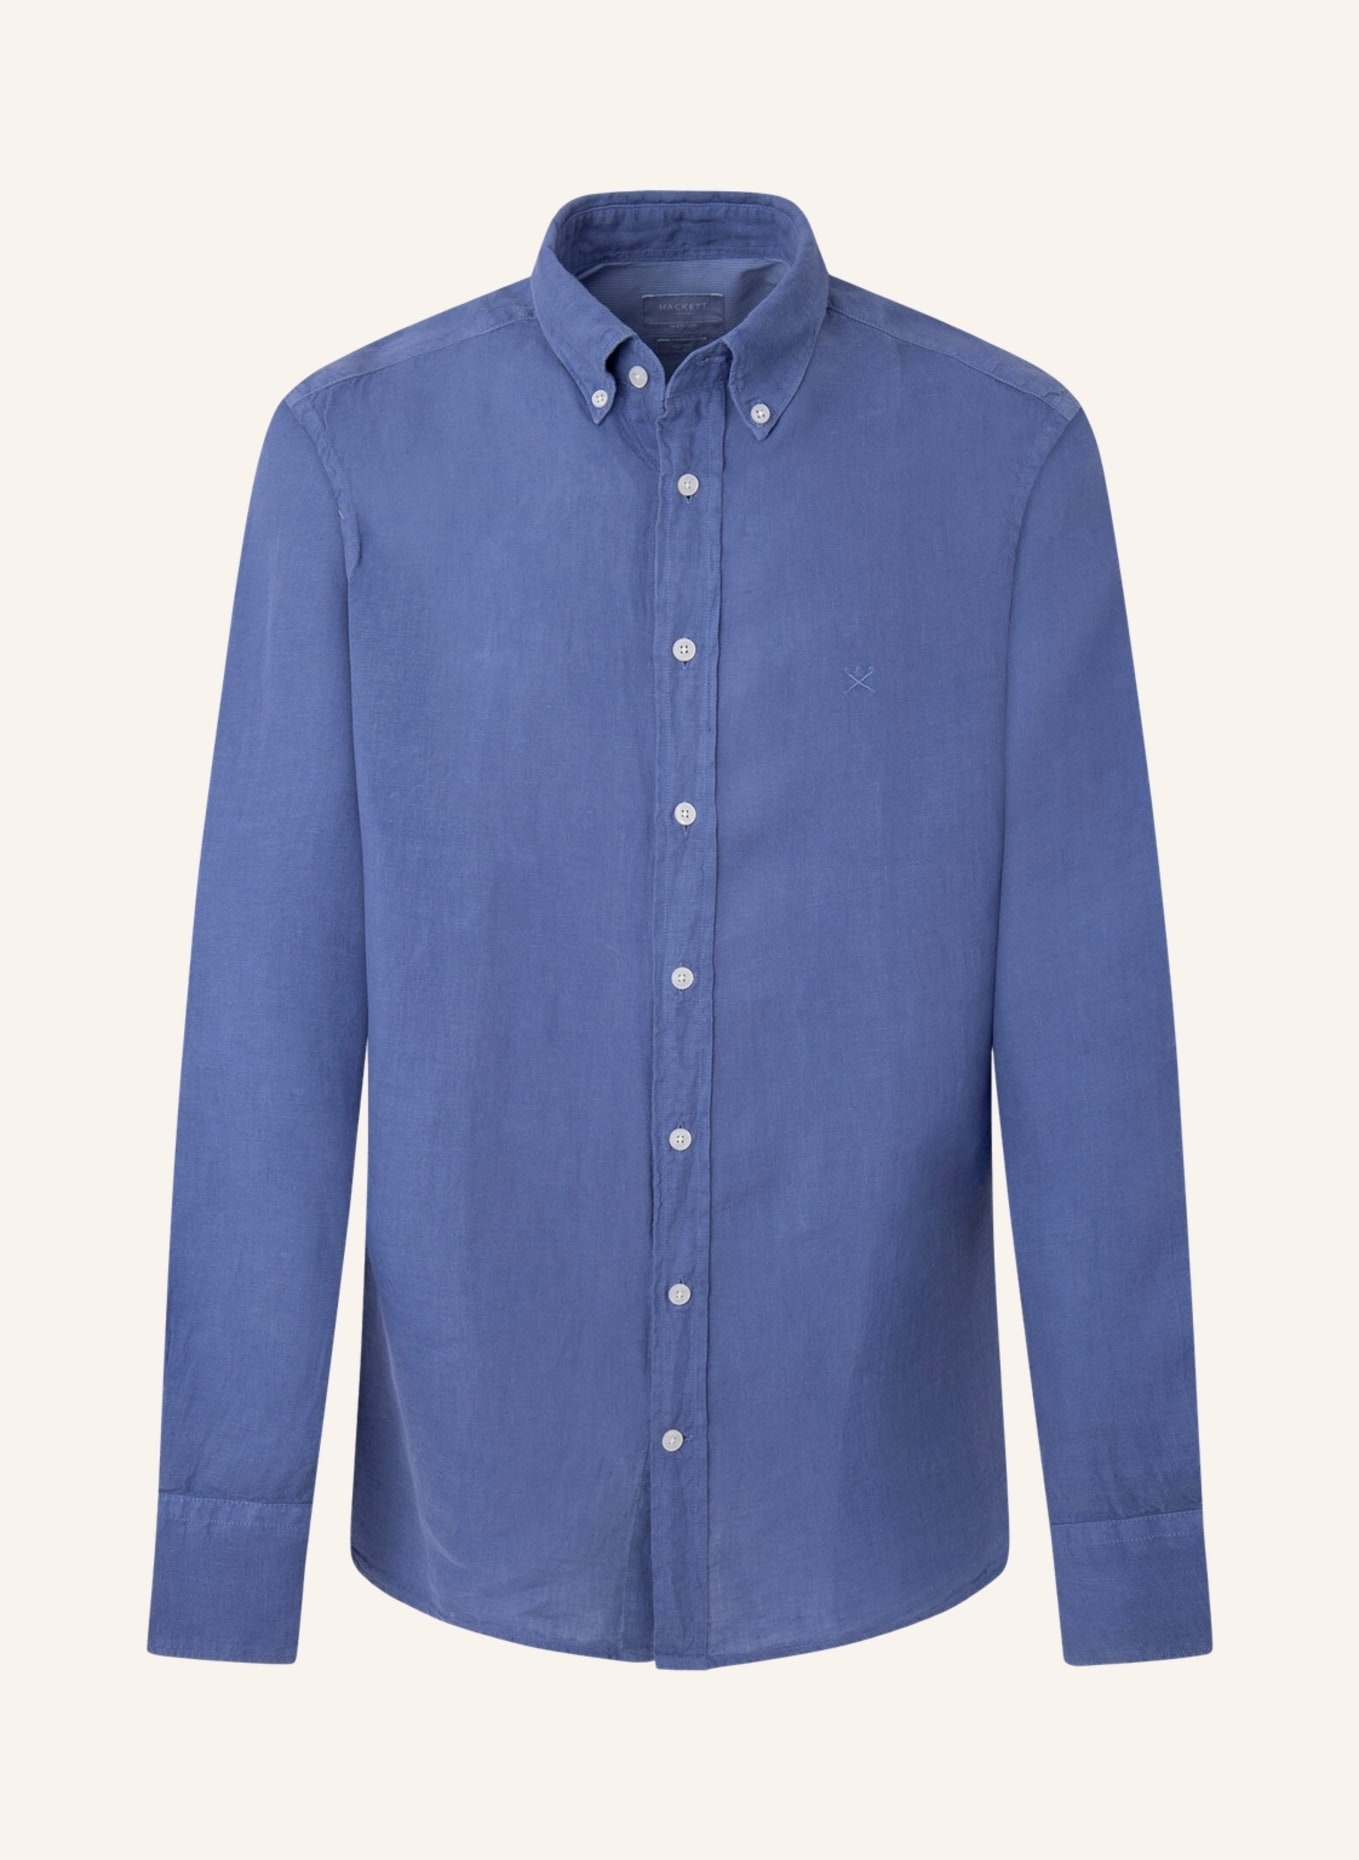 HACKETT LONDON Leinenhemd Slim Fit, Farbe: BLAU (Bild 1)